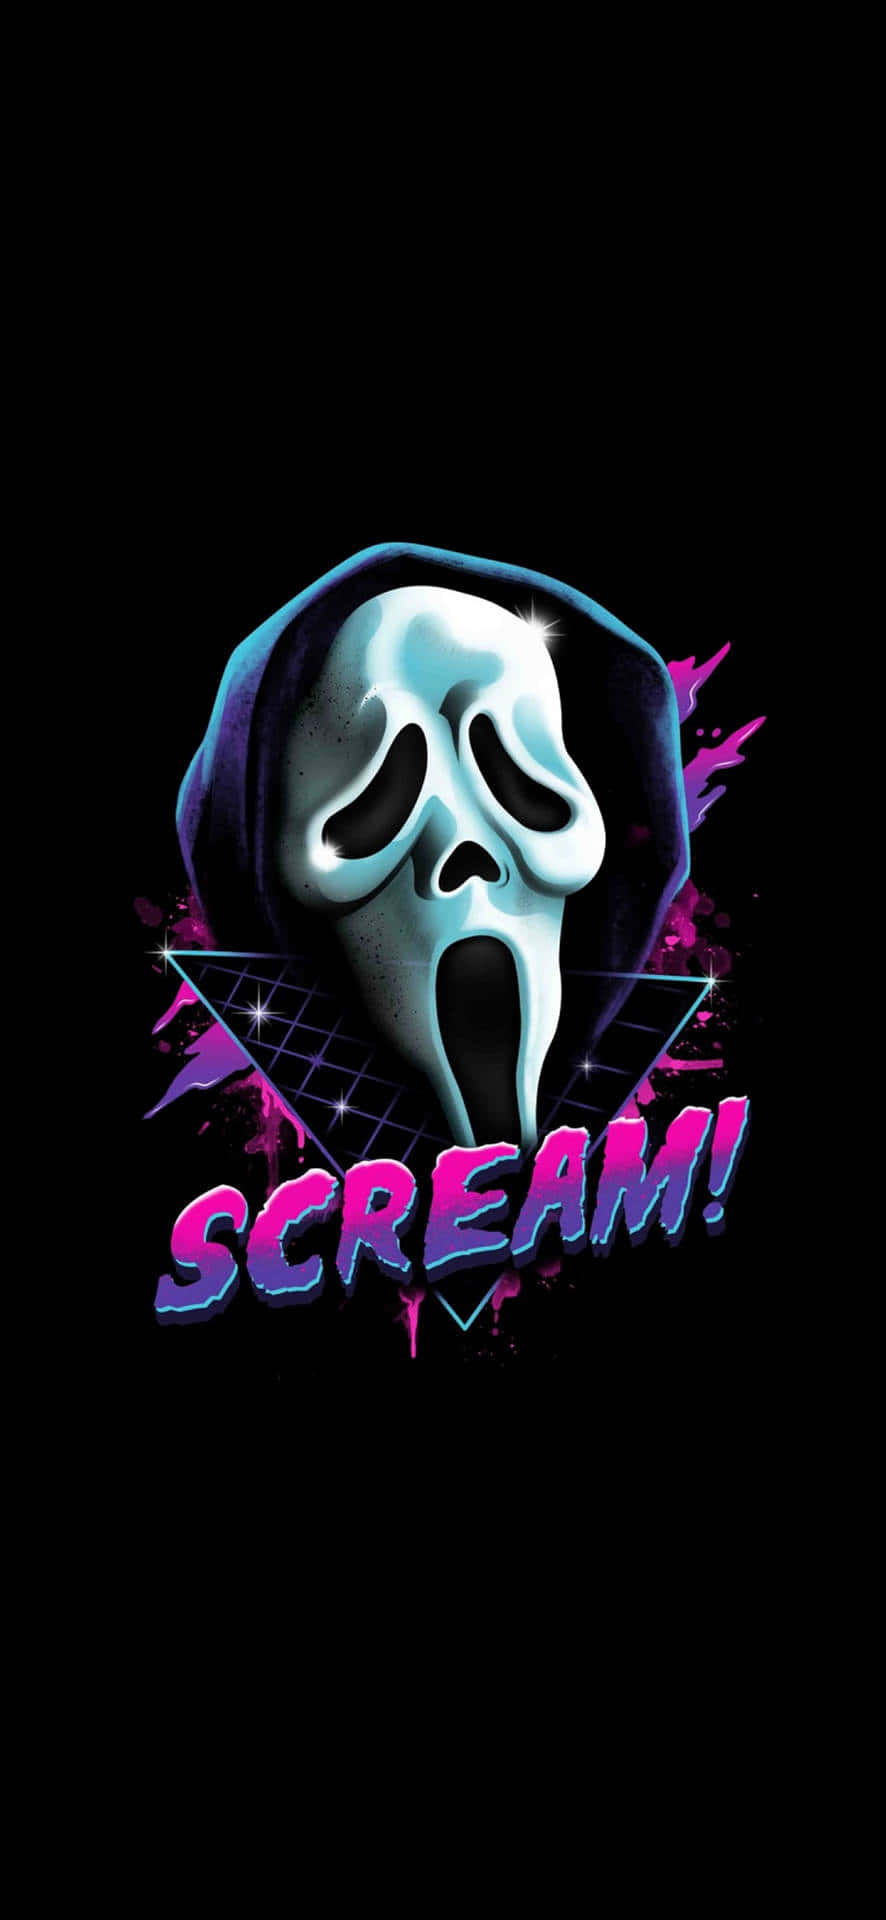 Free Scream Wallpaper Downloads, Scream Wallpaper for FREE